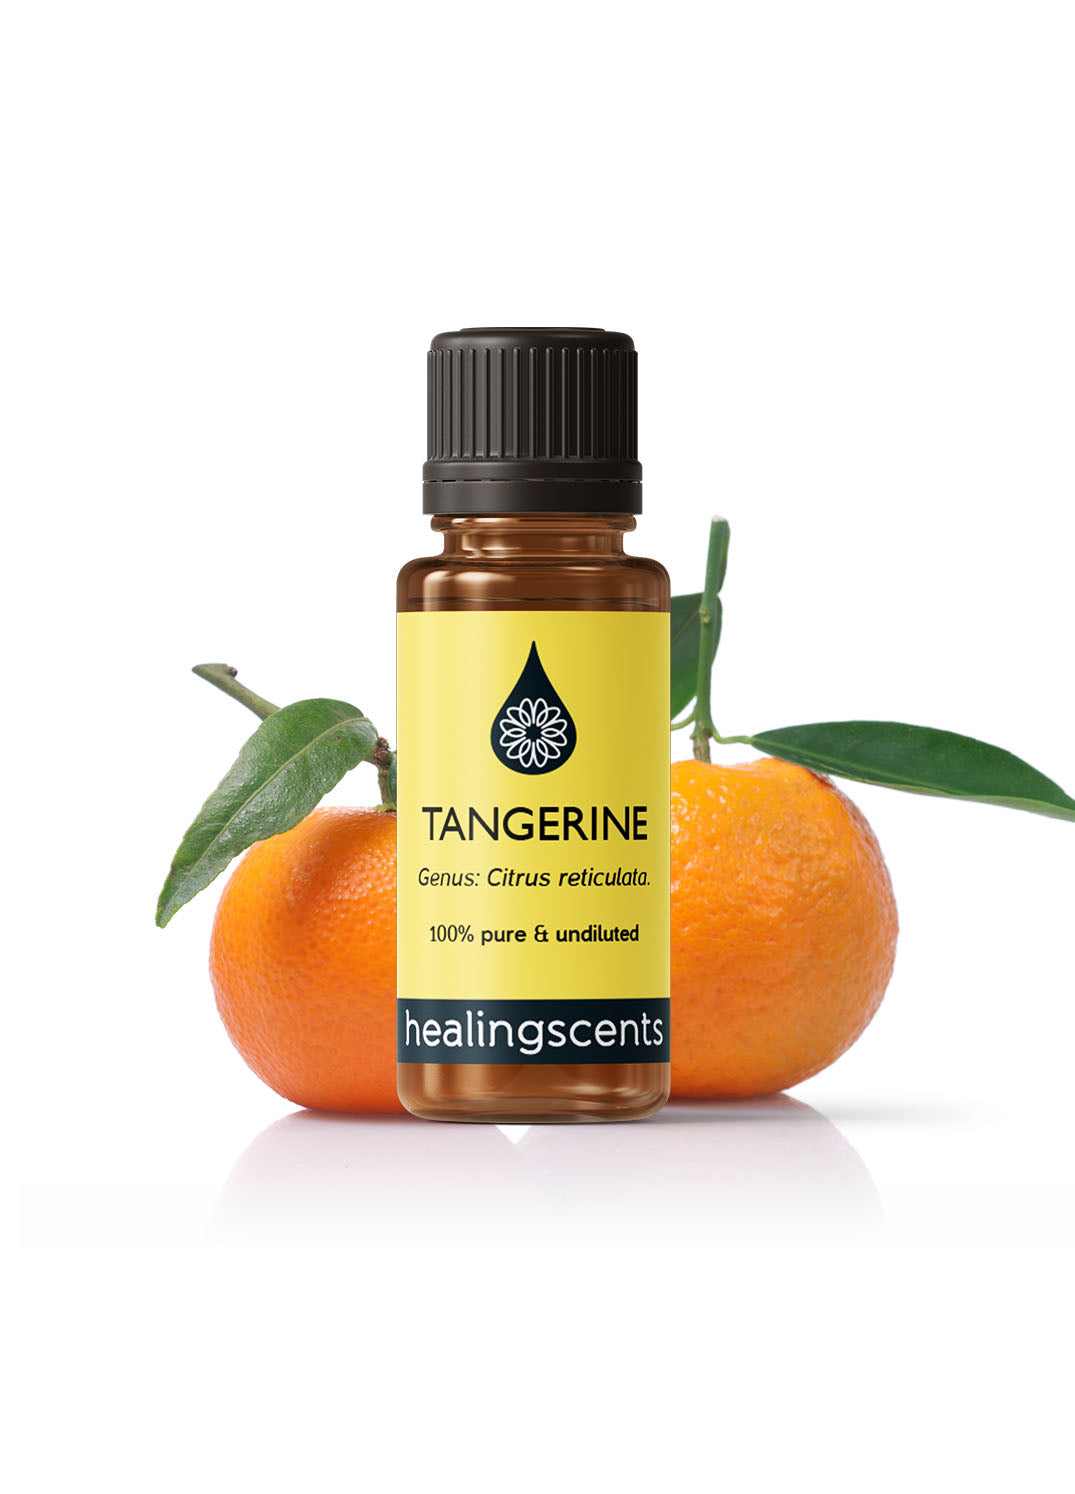 Tangerine Essential Oil Essential Oils Healingscents   